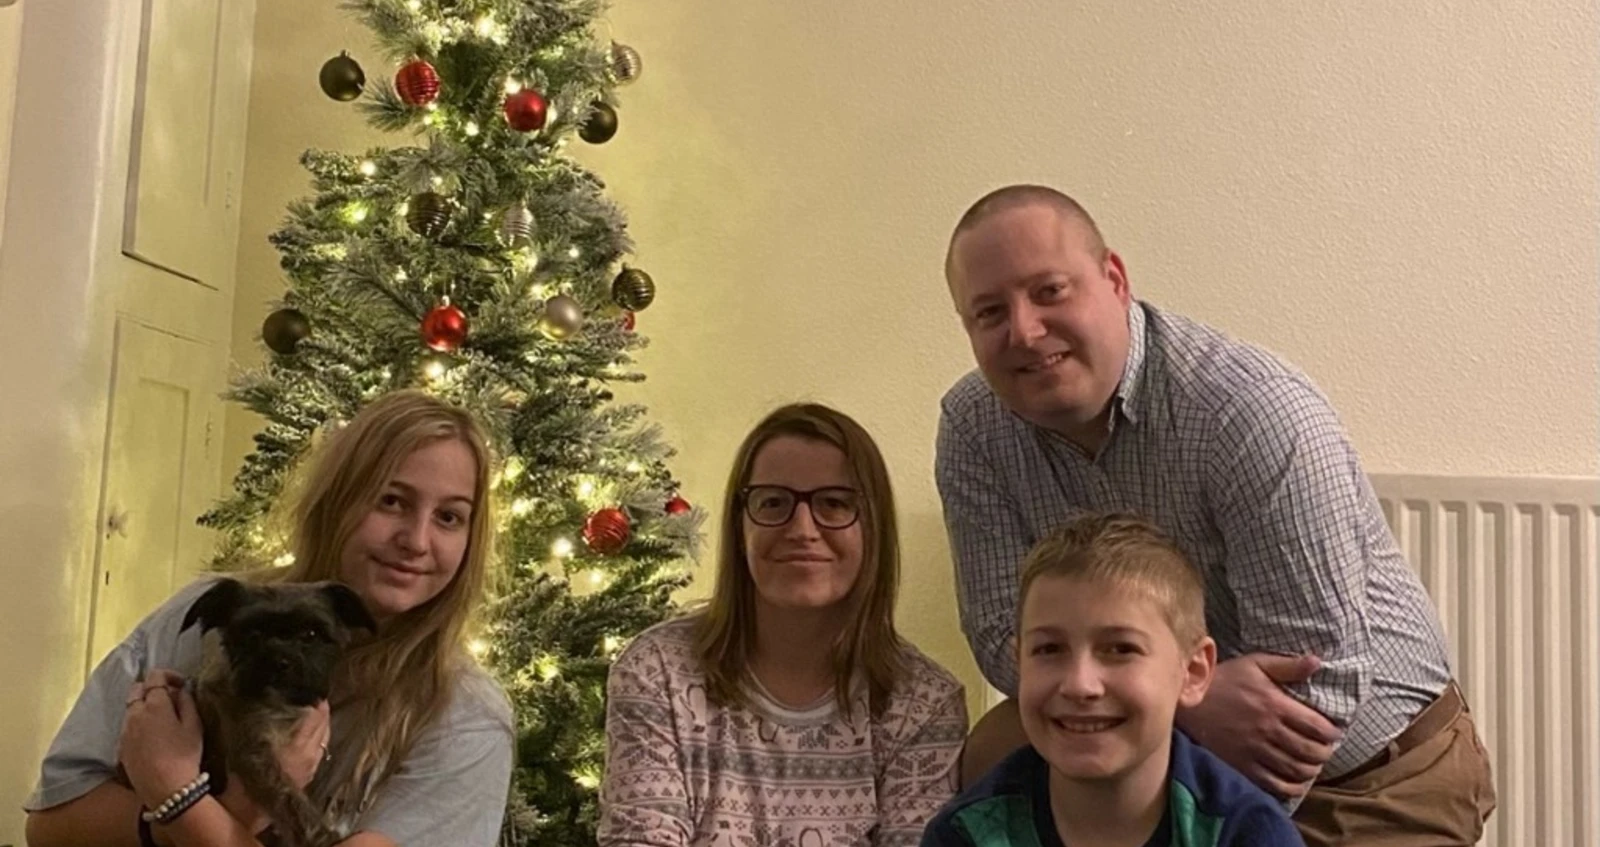 Chris and his family reunited at Christmas